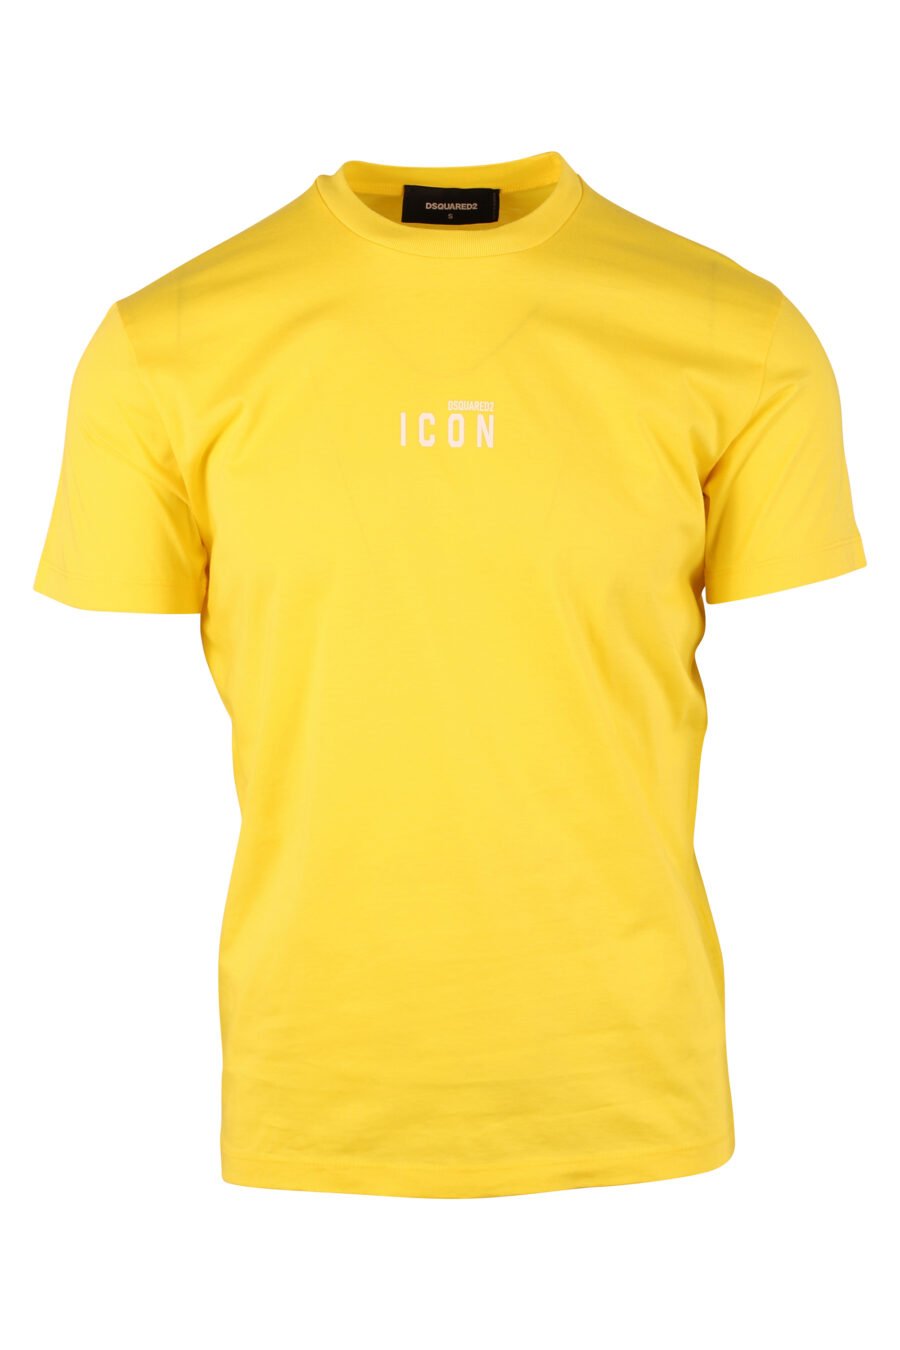 Gelbes T-Shirt mit Minilog "Ikone" - IMG 9739